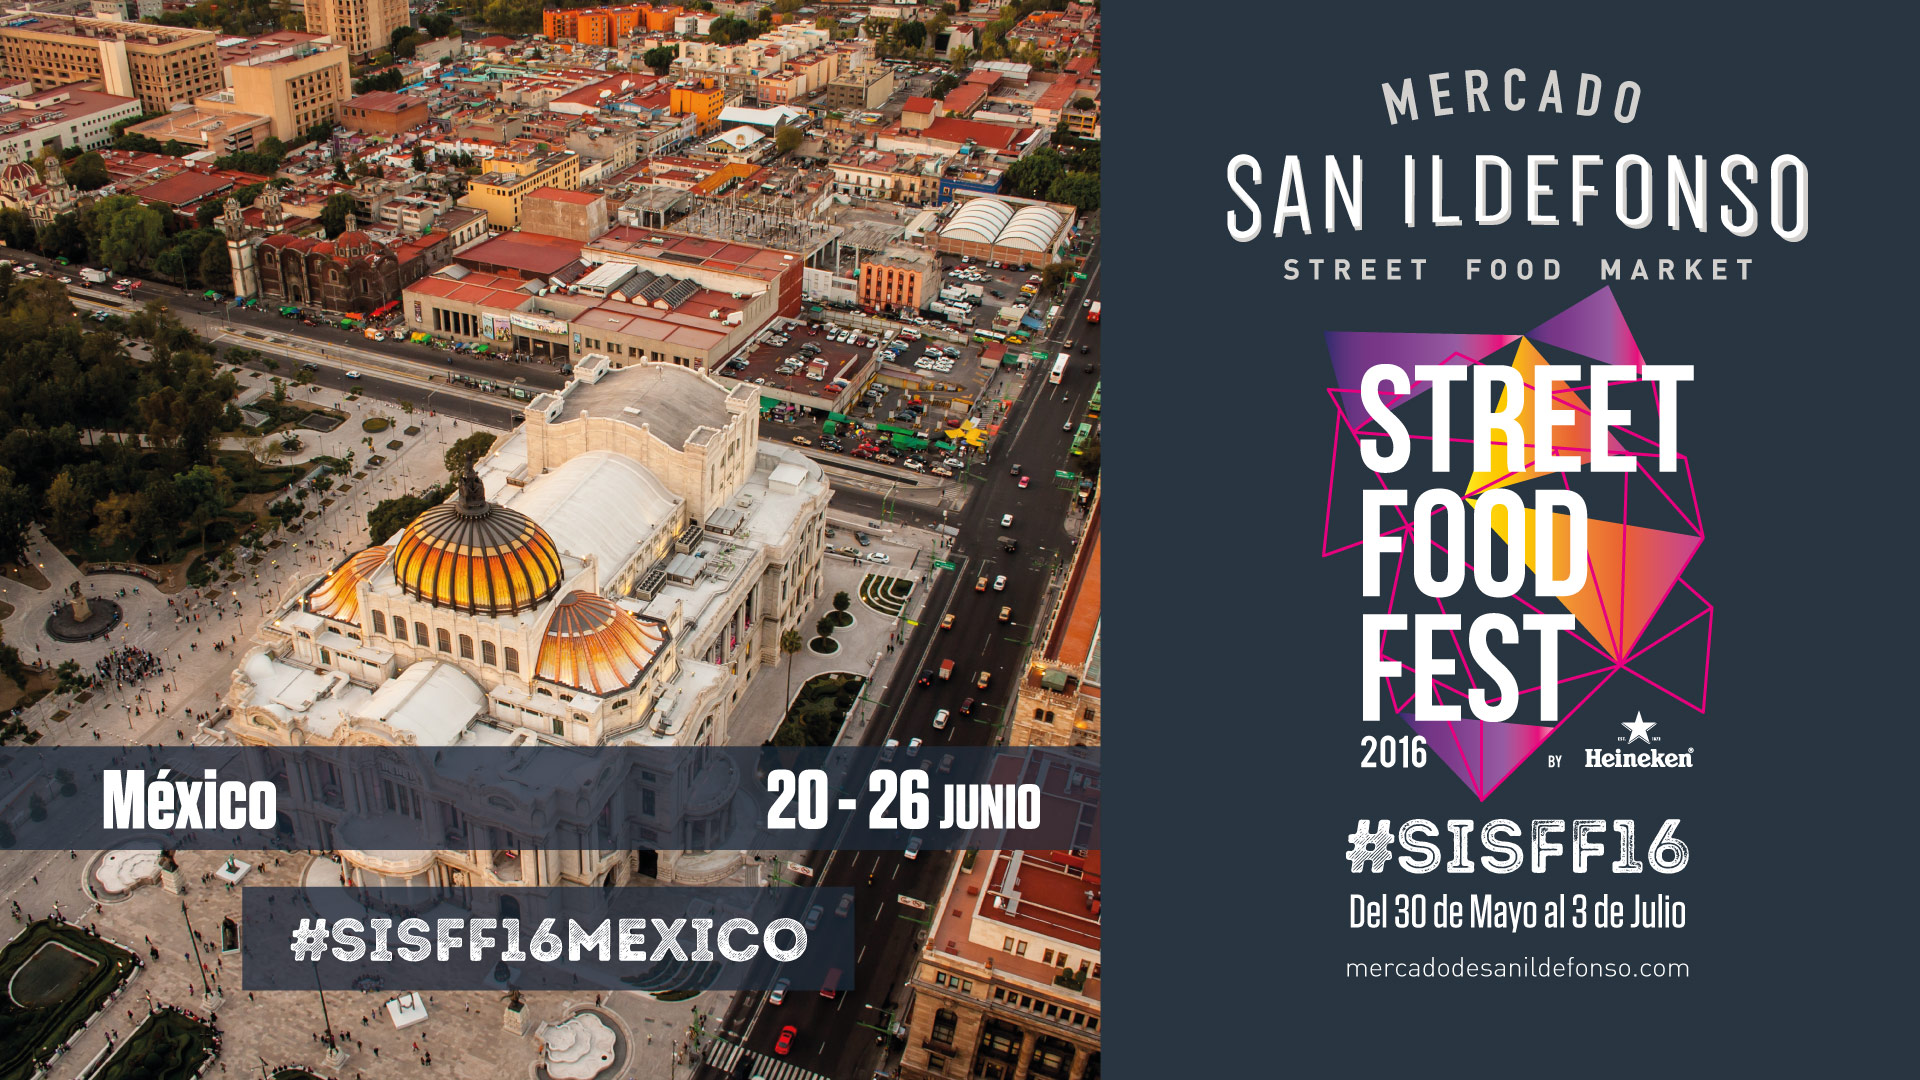 Mexico SISFF16